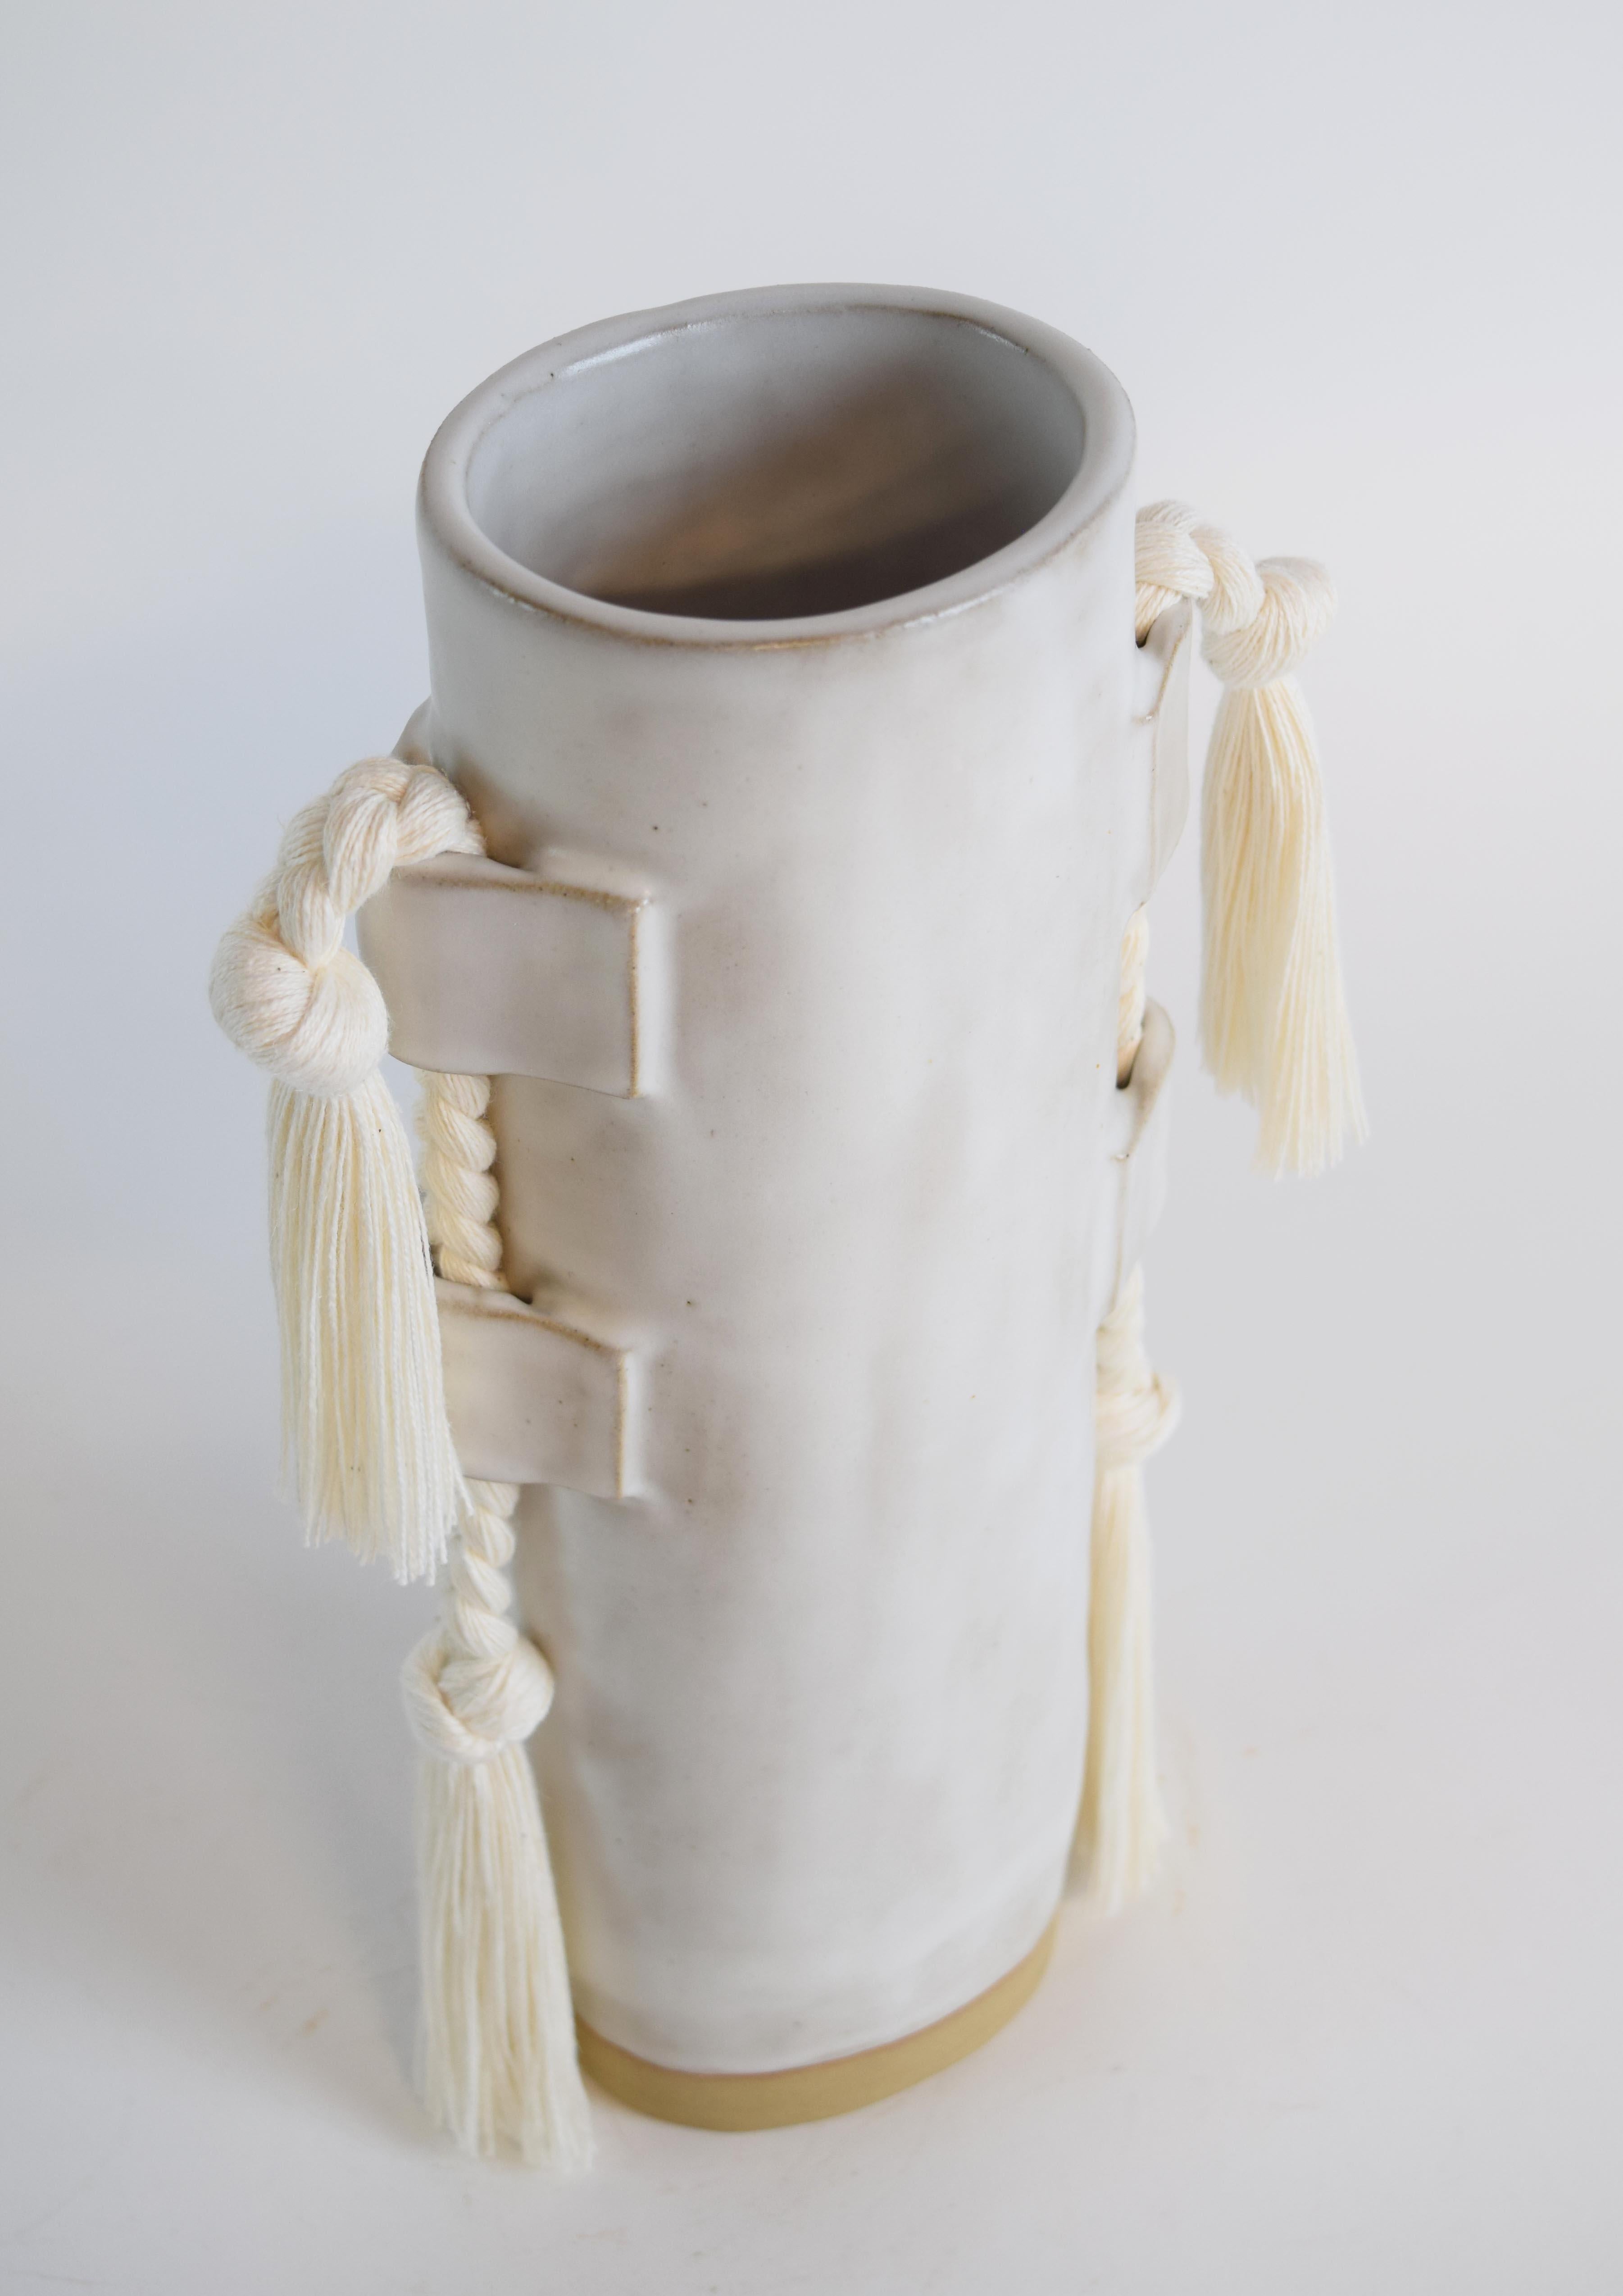 Organic Modern Handmade Ceramic Vase #504 in Satin White with White Cotton Braid and Fringe For Sale